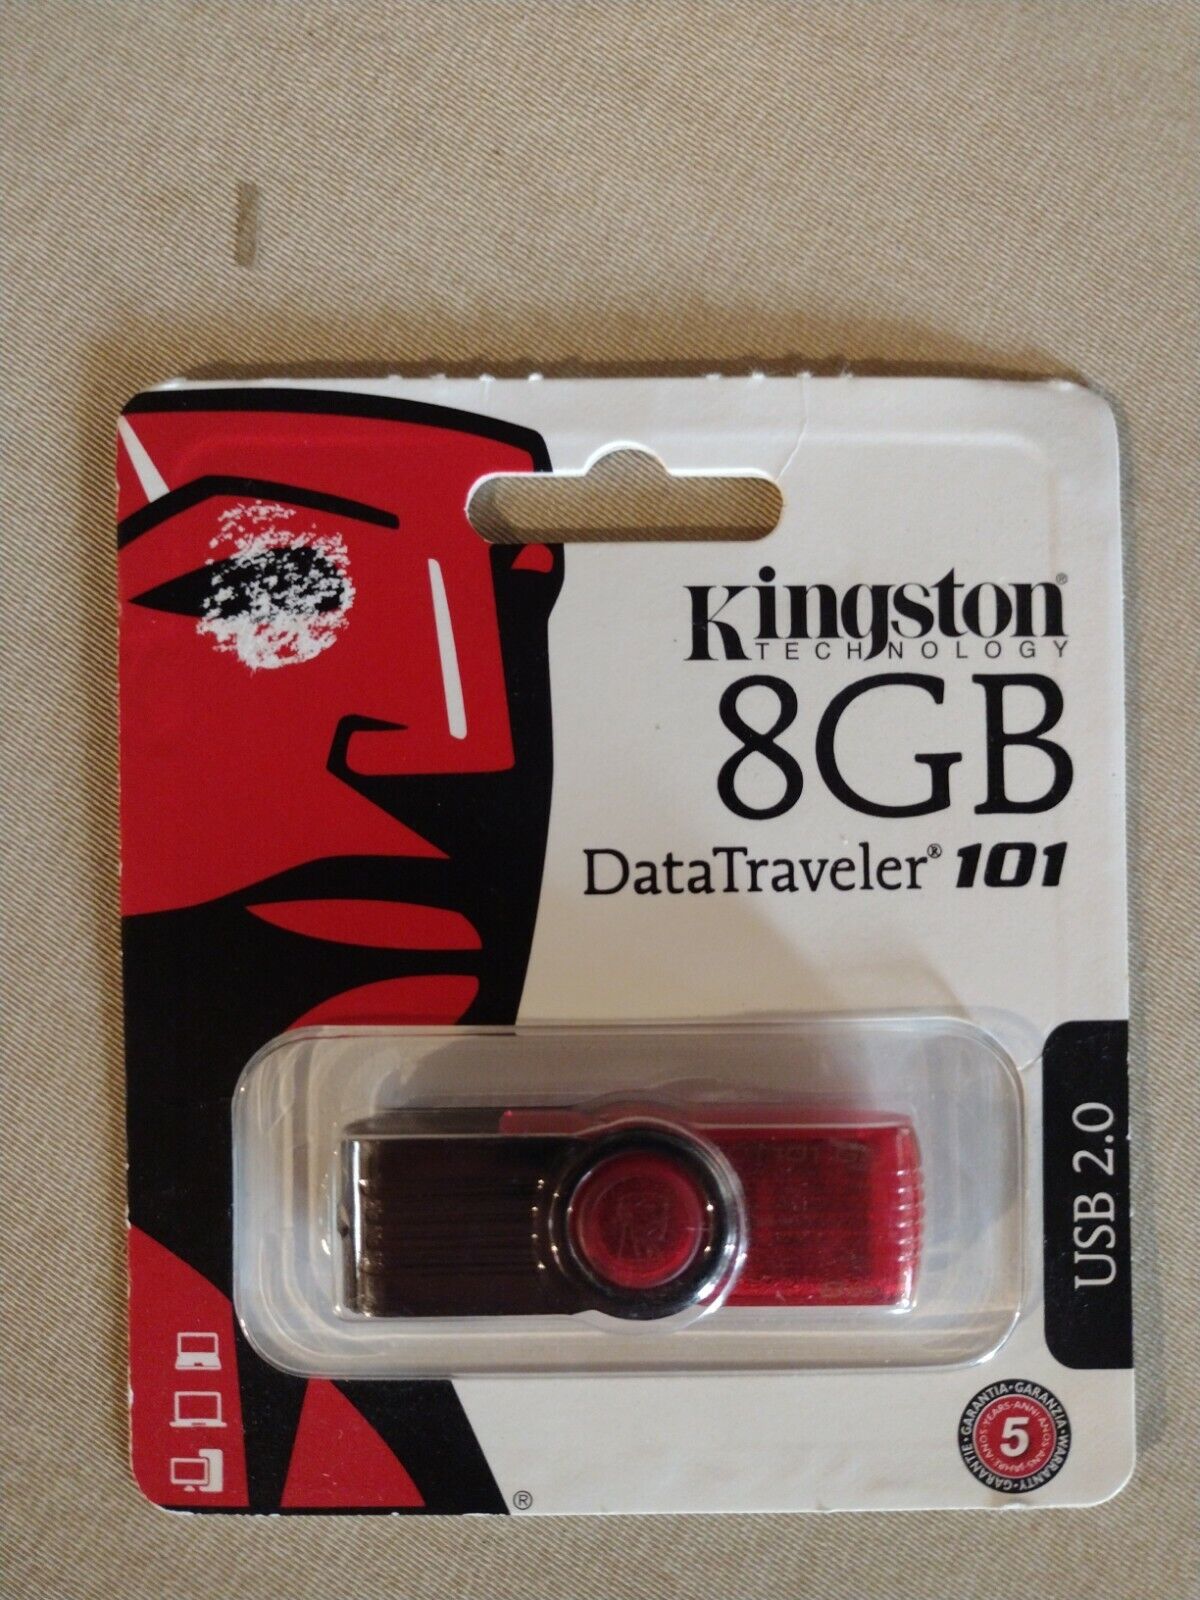 New Kingston DataTraveler 101 8GB USB Flash Drive Unopened DT101G2